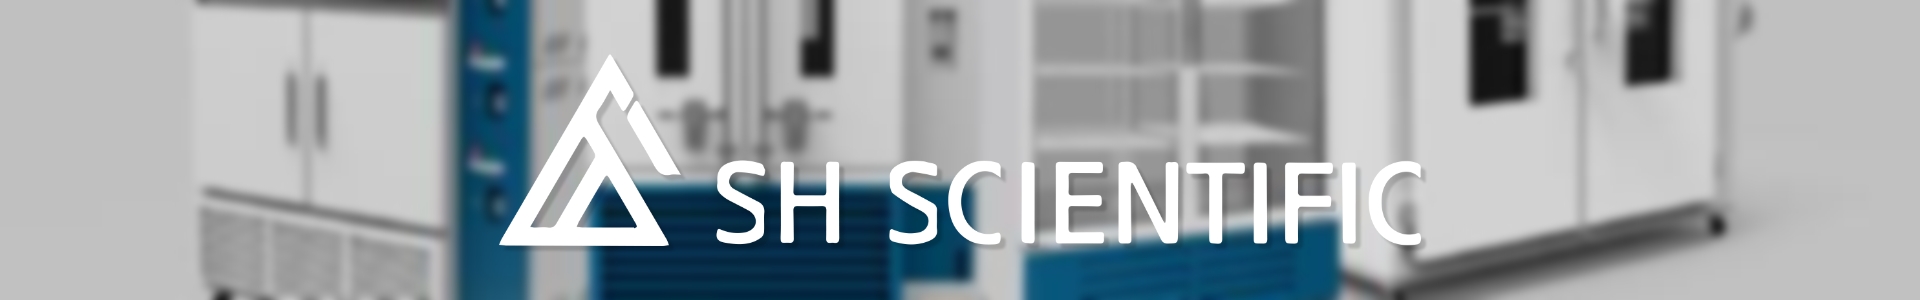 sh scientific brand - Lò nung SH SCIENTIFIC